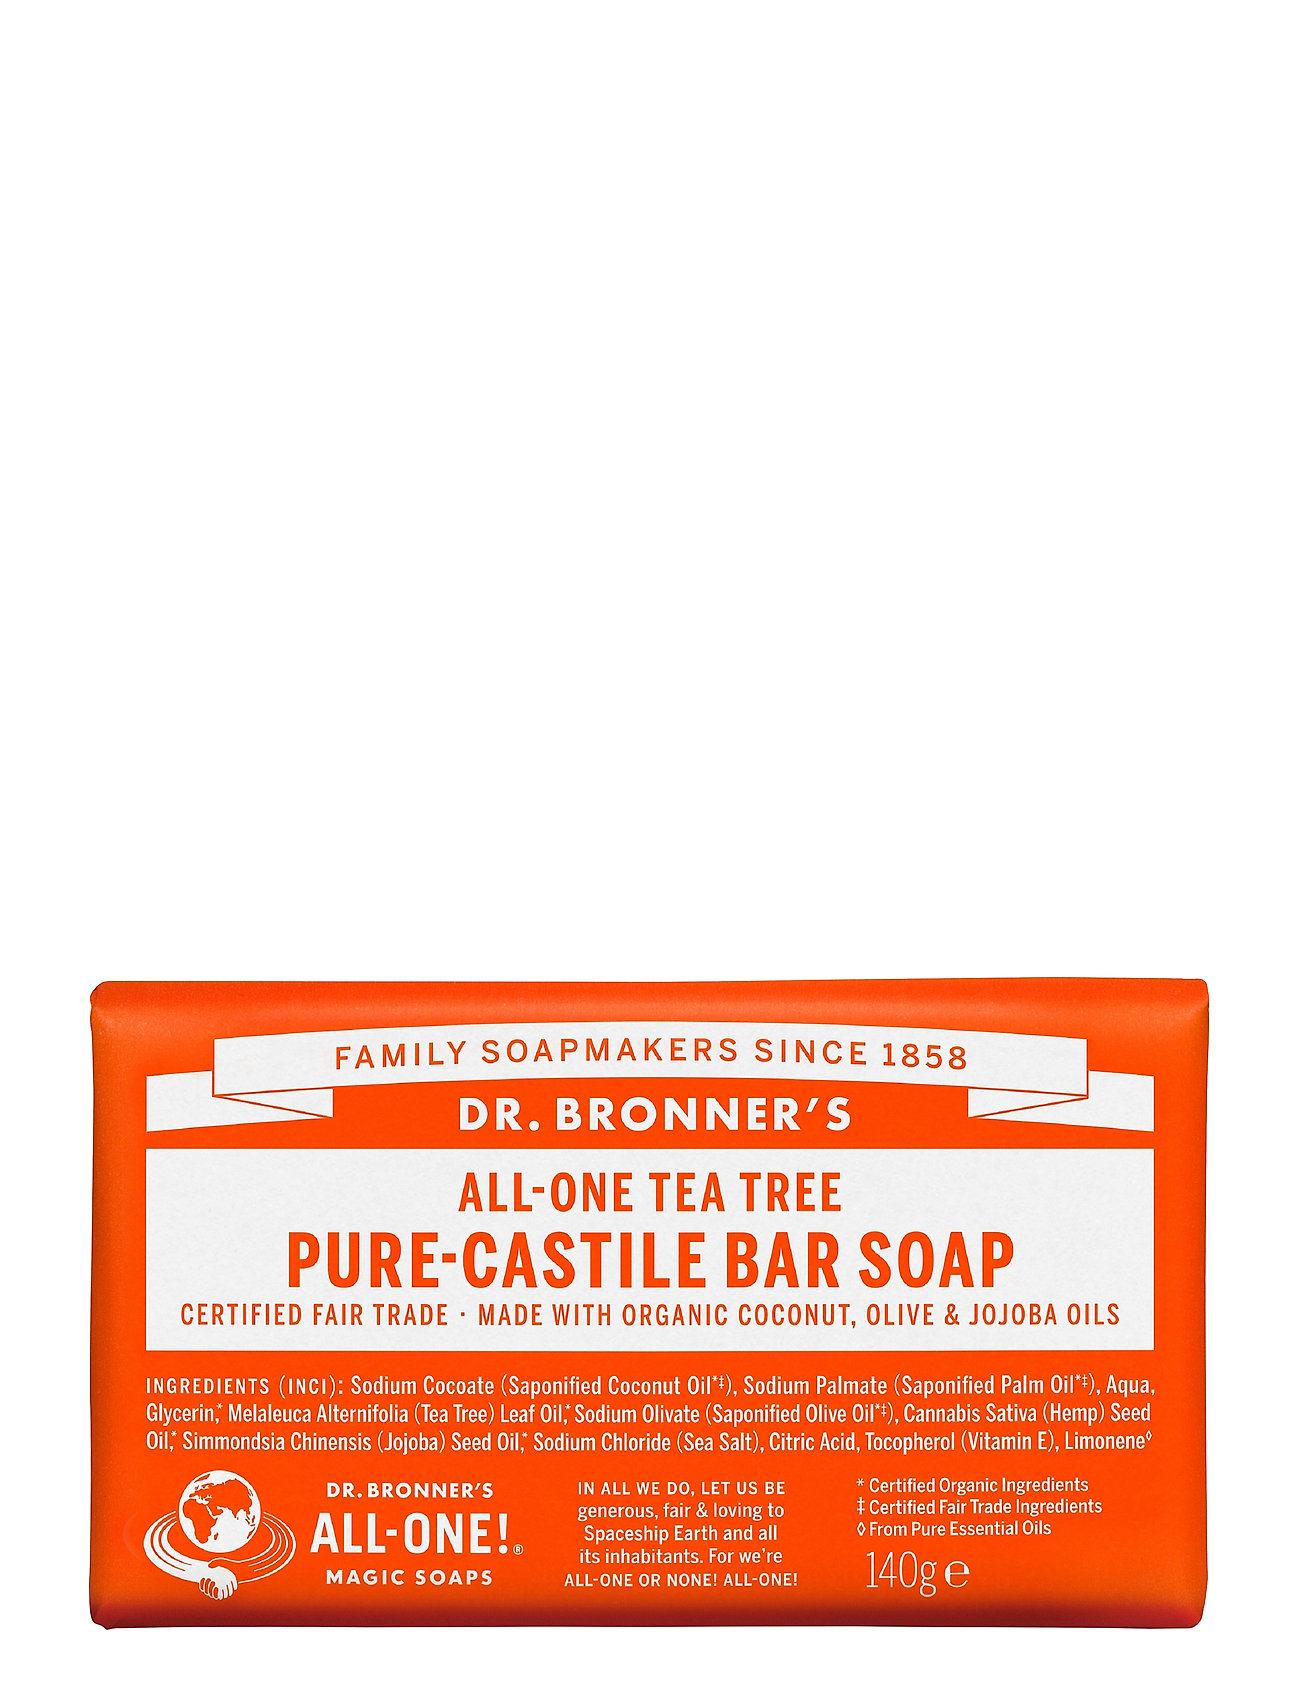 Pure-Castile Bar Soap Tea Tree Beauty Women Skin Care Body Nude Dr. Bronner’s